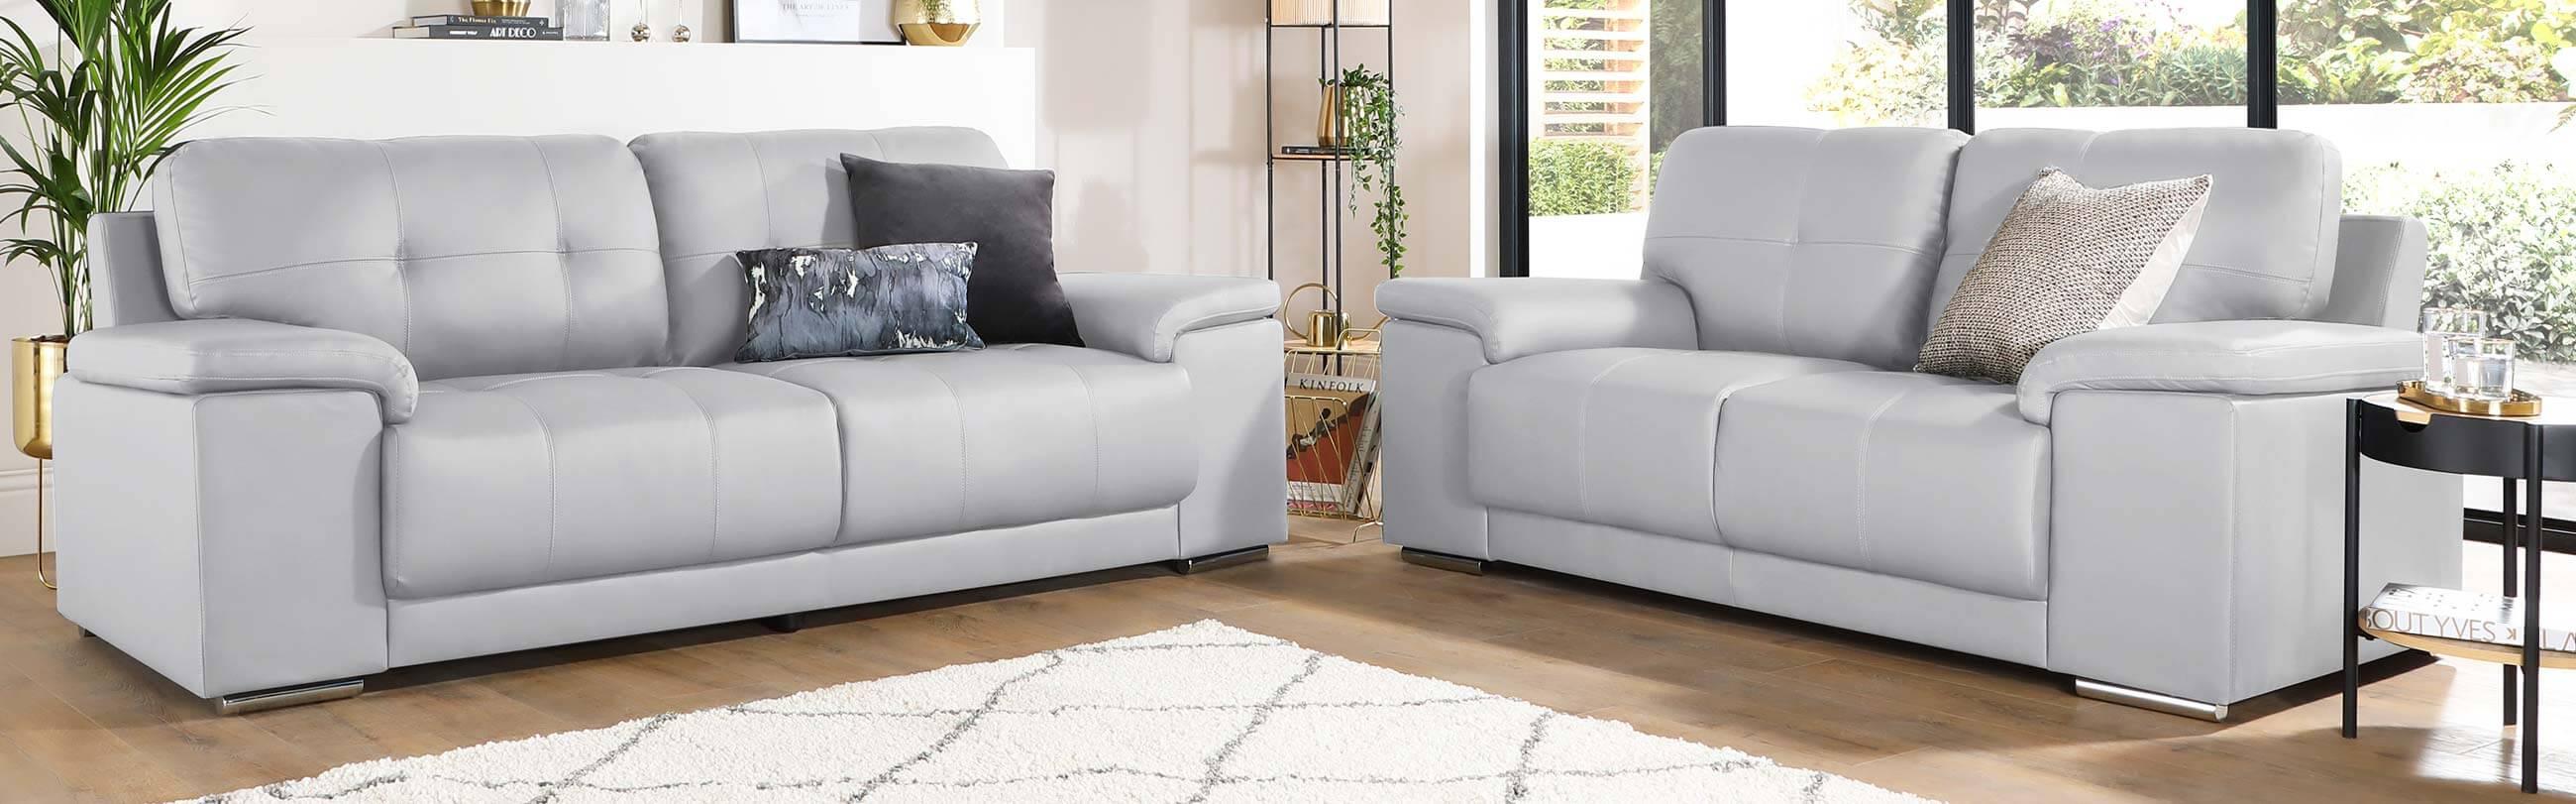 Kansas Sofa Collection | Furniture And Choice